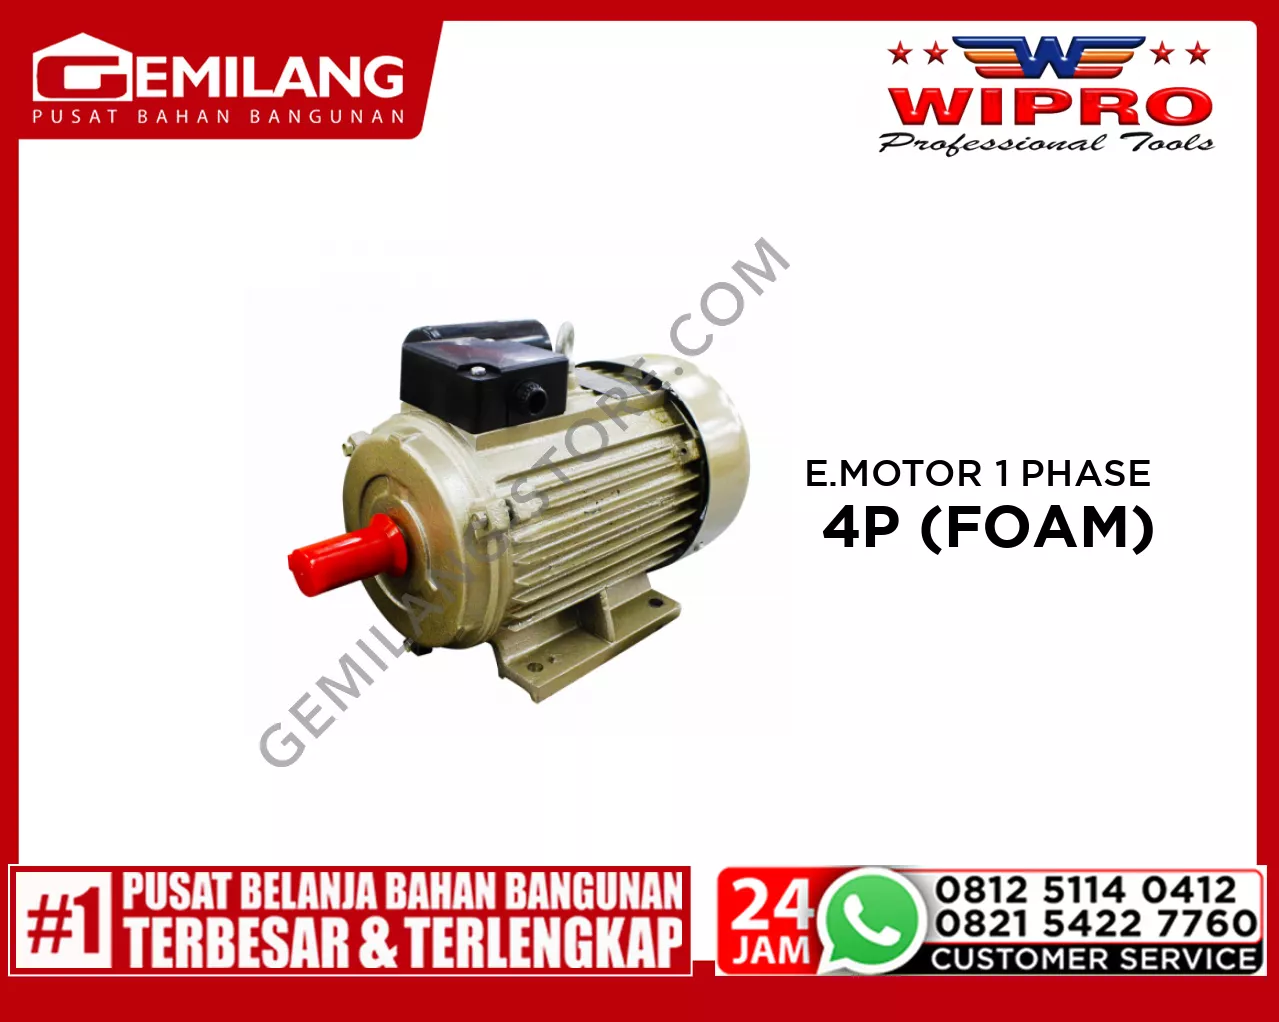 WIPRO ELECTROMOTOR 1 PHASE 1 5HP 4P (FOAM)